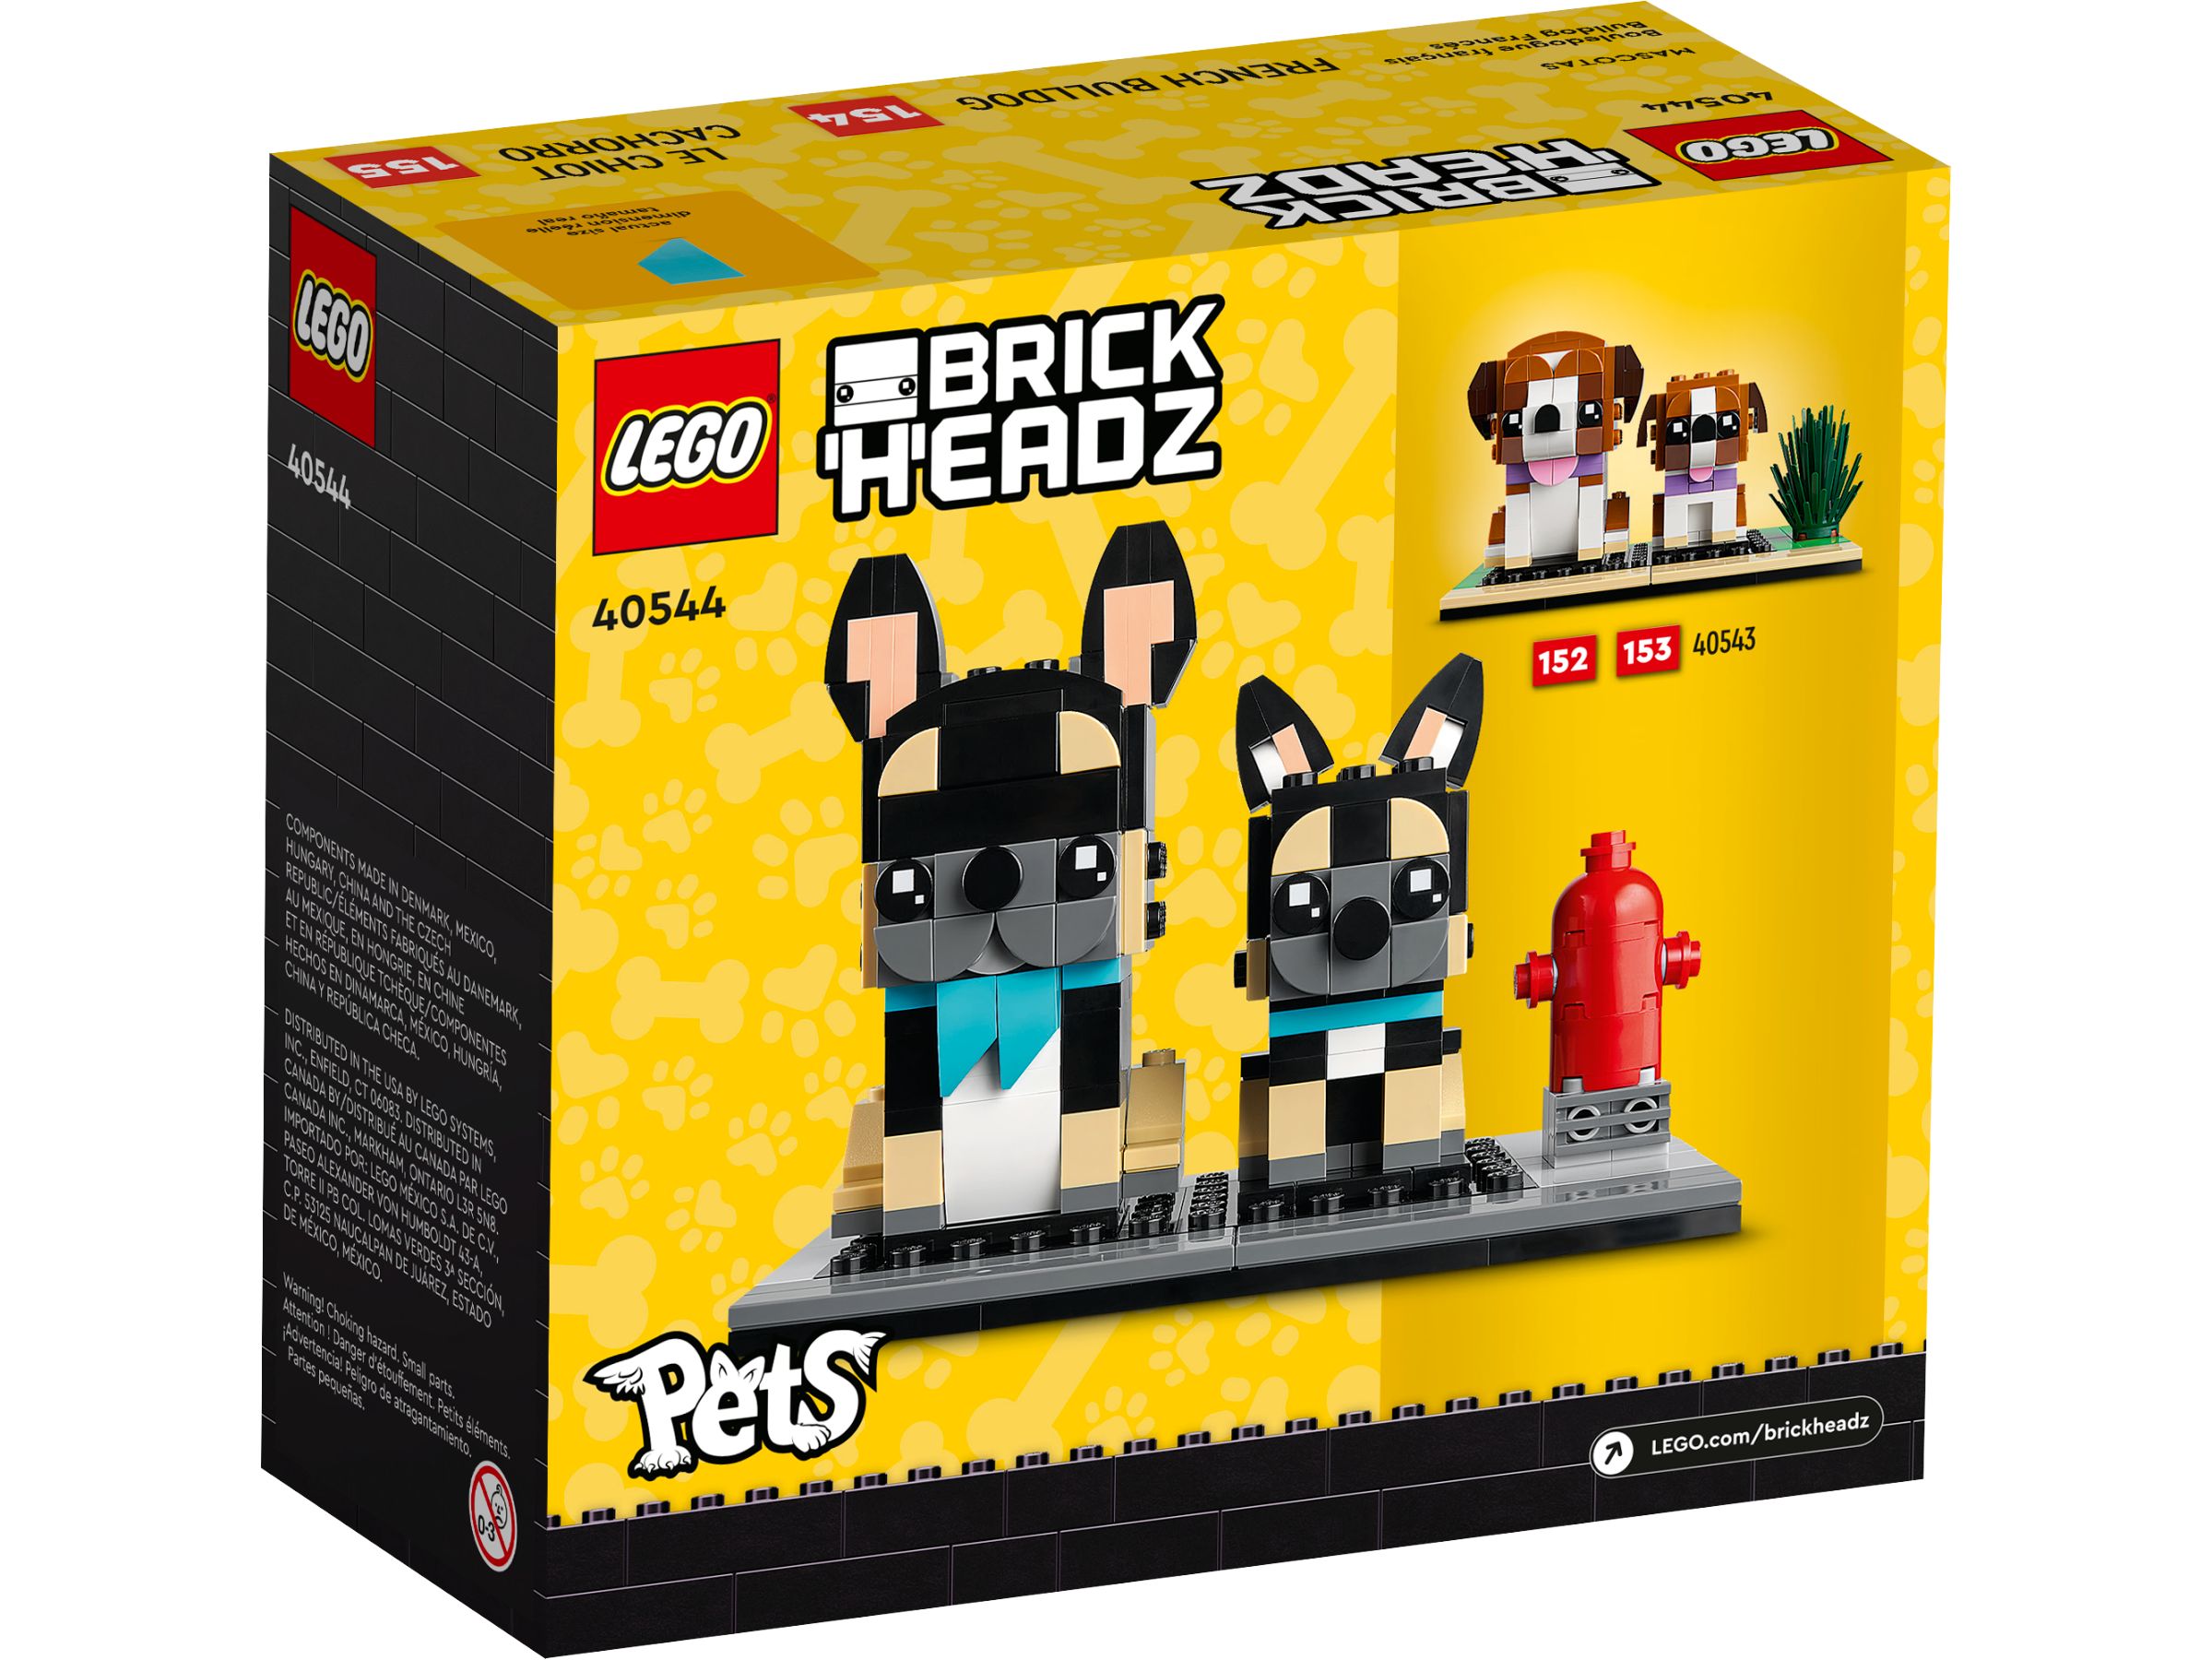 LEGO BrickHeadz 40544 Pets - French Bulldog LEGO_40544_alt4.jpg